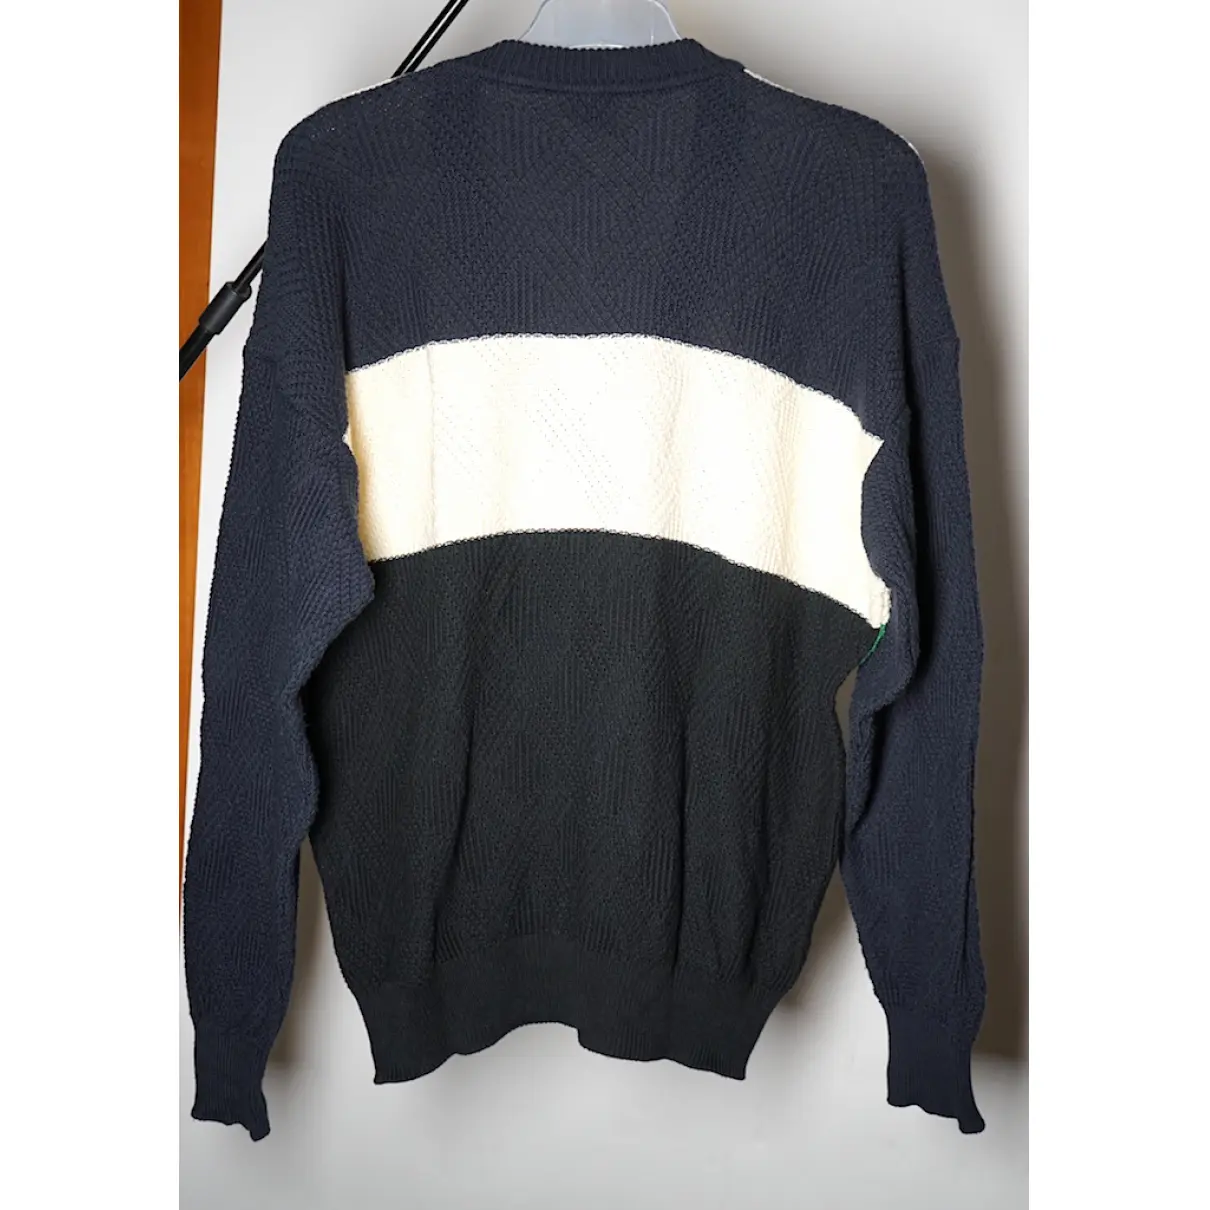 Buy Gianfranco Ferré Wool vest online - Vintage